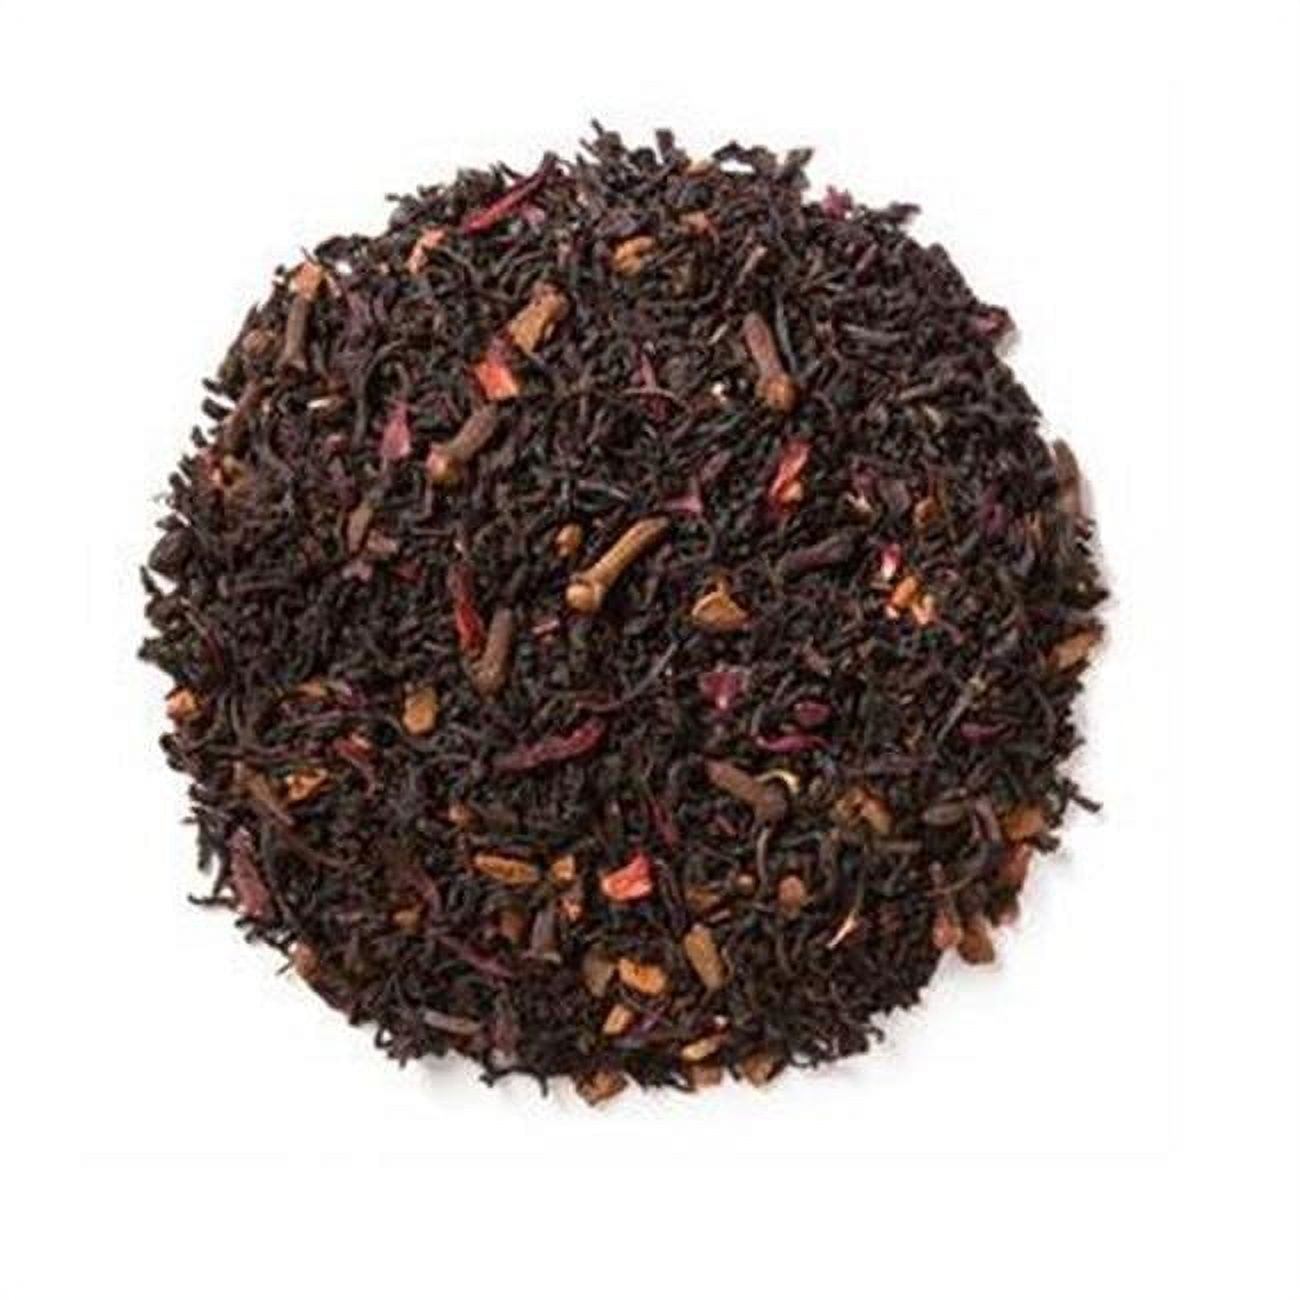 Picture of Davidsons Organics 7355 2 oz Spiced Raspberry Sampler Tea - Pack of 6